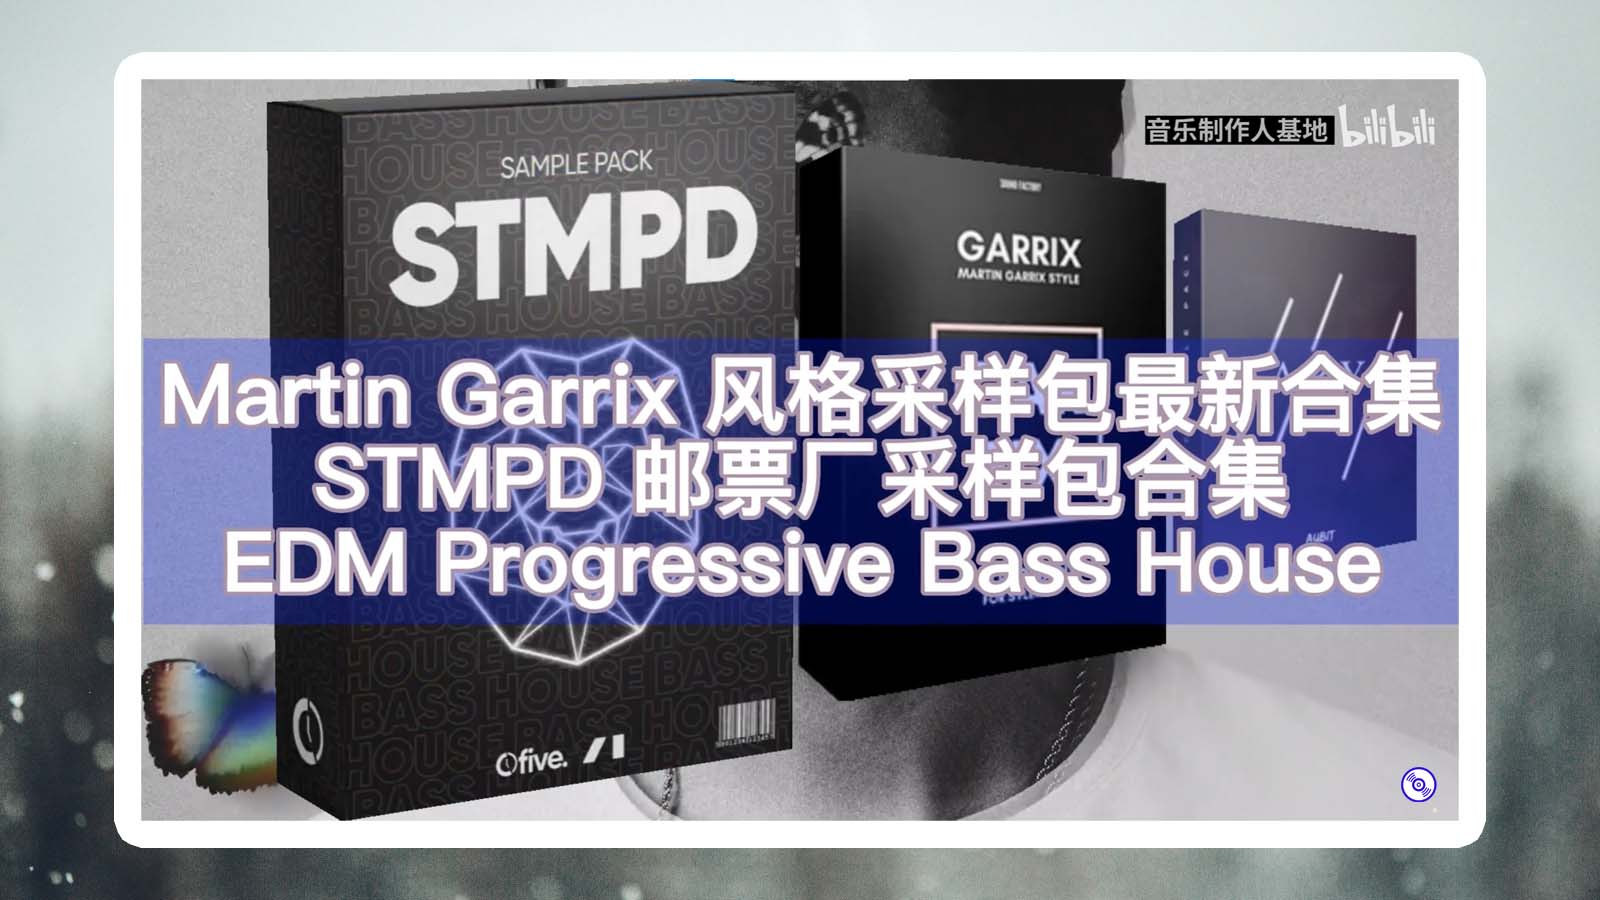 Martin Garrix 风格采样包最新合集 STMPD 邮票厂采样包合集 EDM Progressive Bass BigRoom House